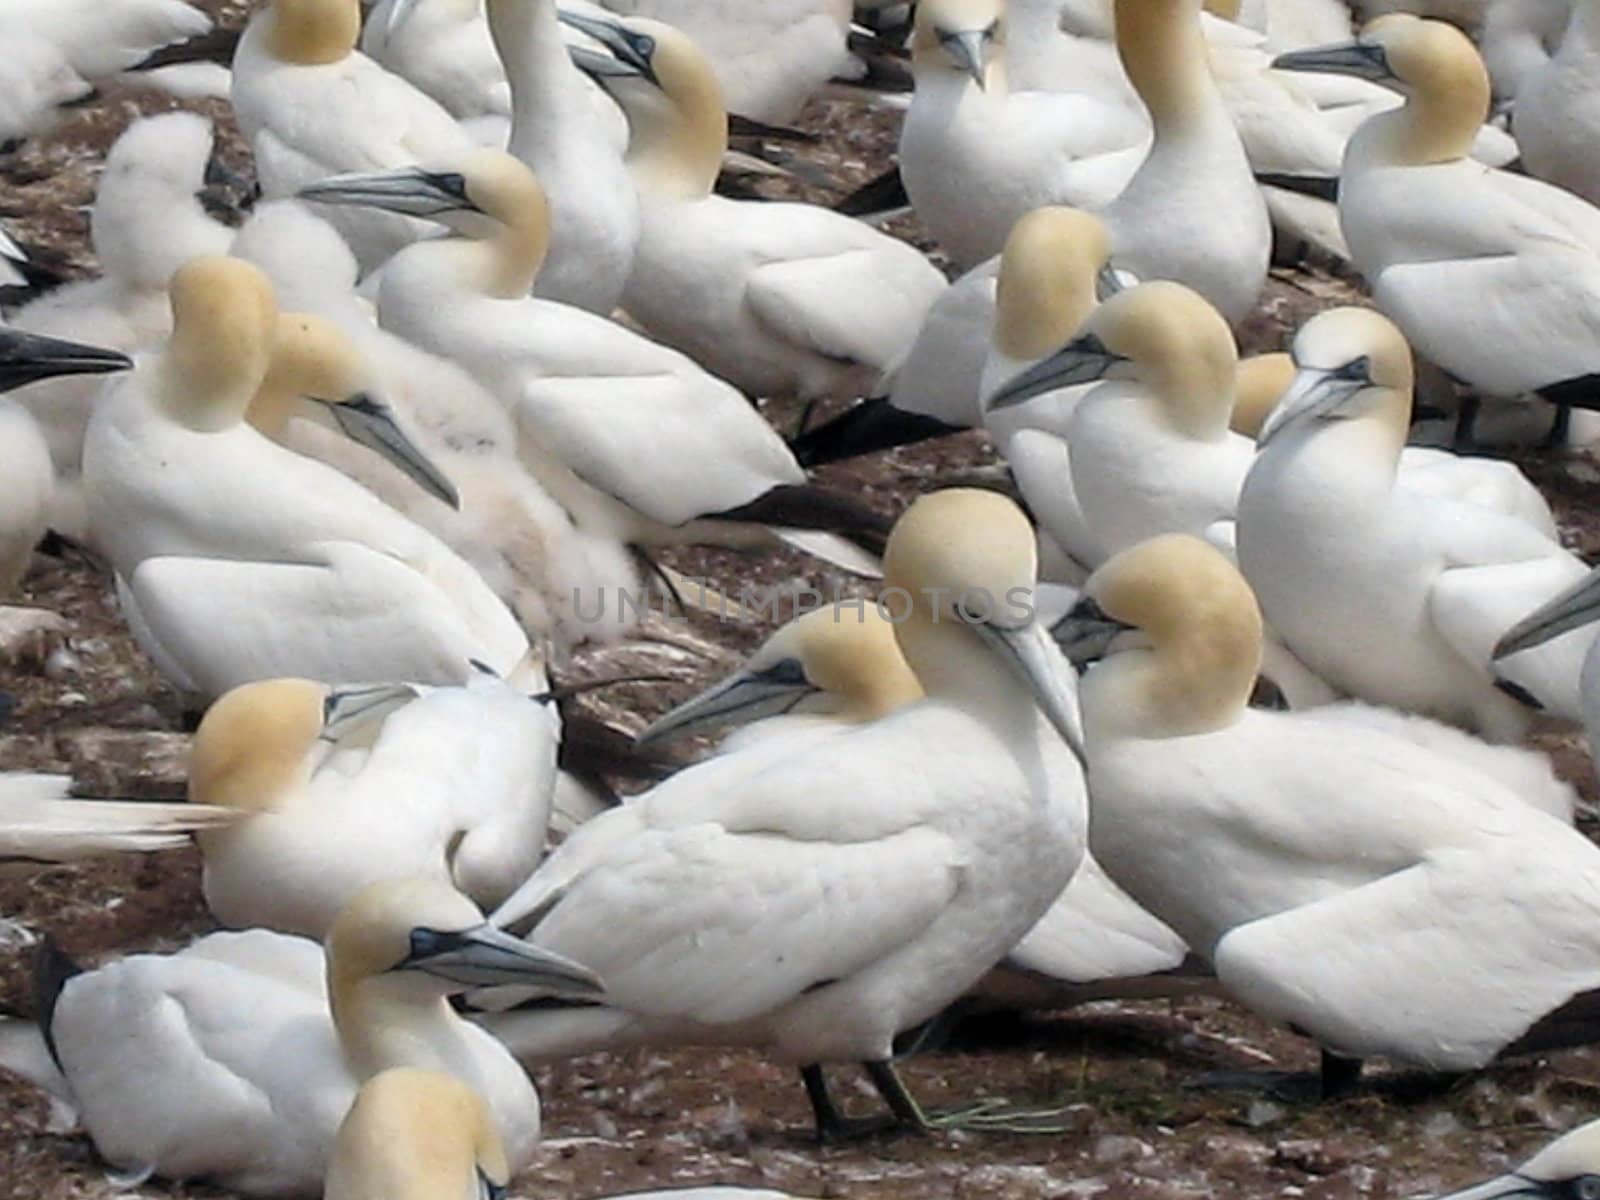 Northern gannets colony on Bonaventure island, Quebec